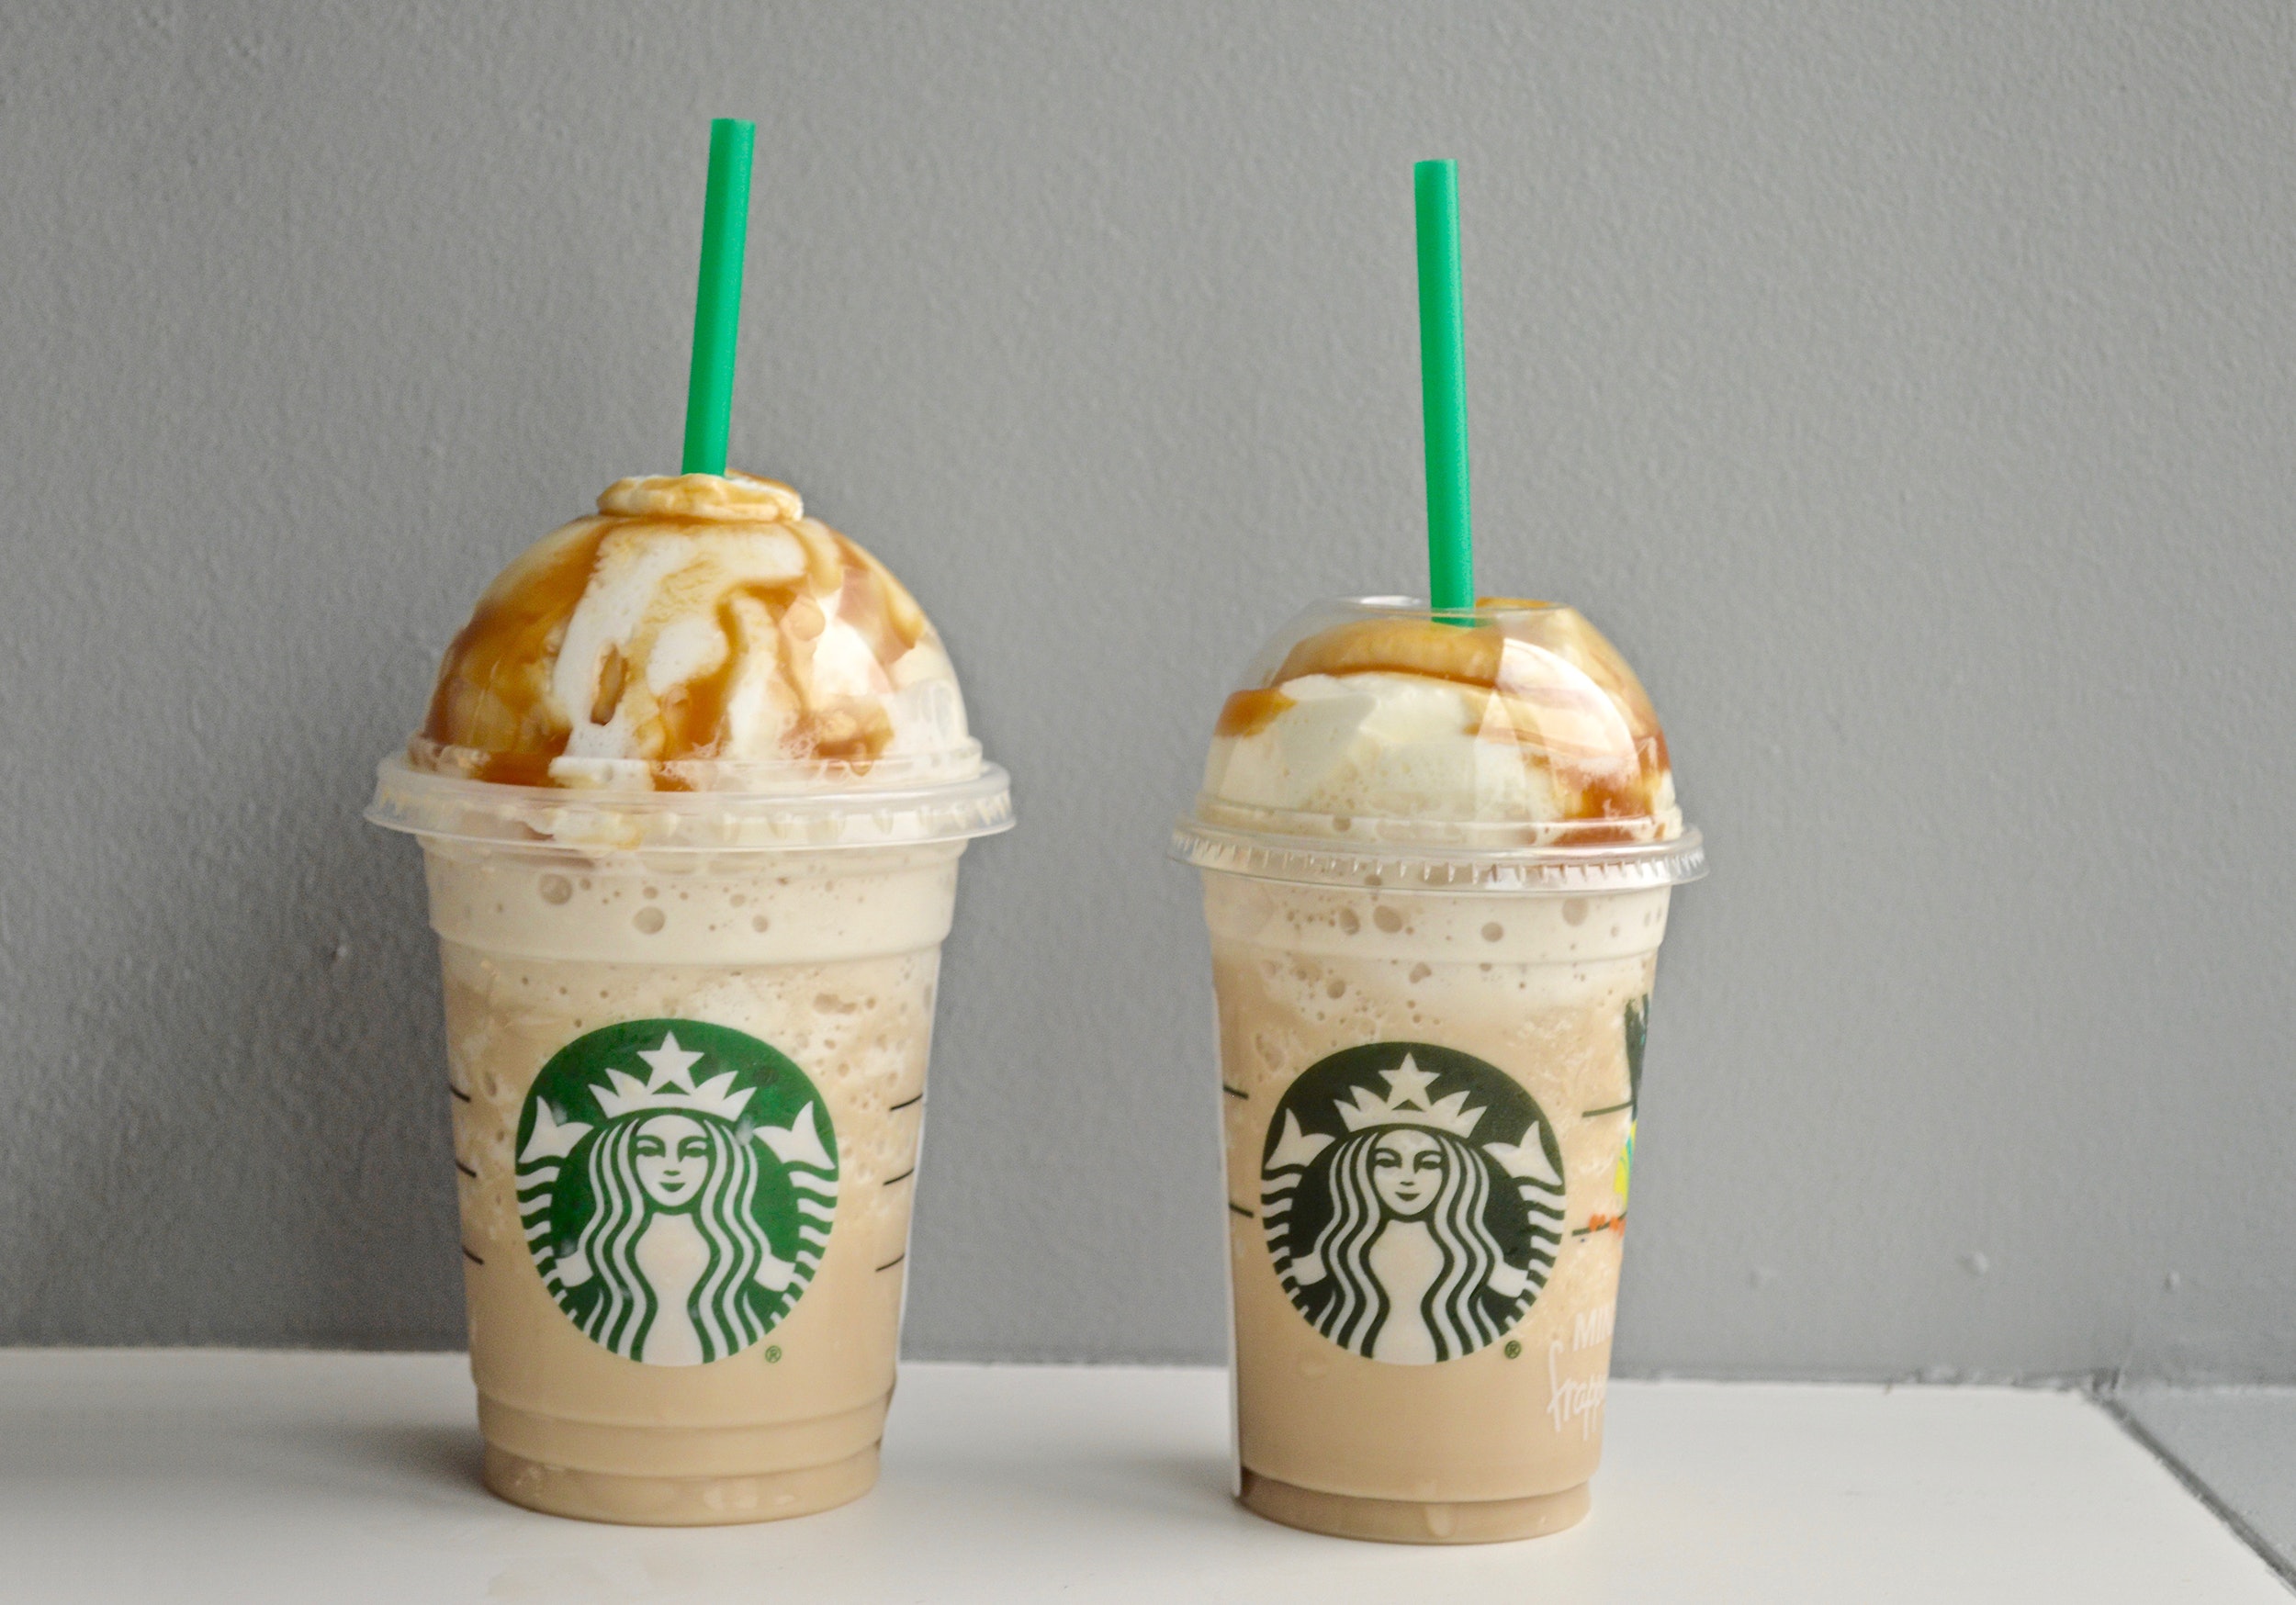 Does Starbucks vanilla bean creme frappuccino have caffeine?